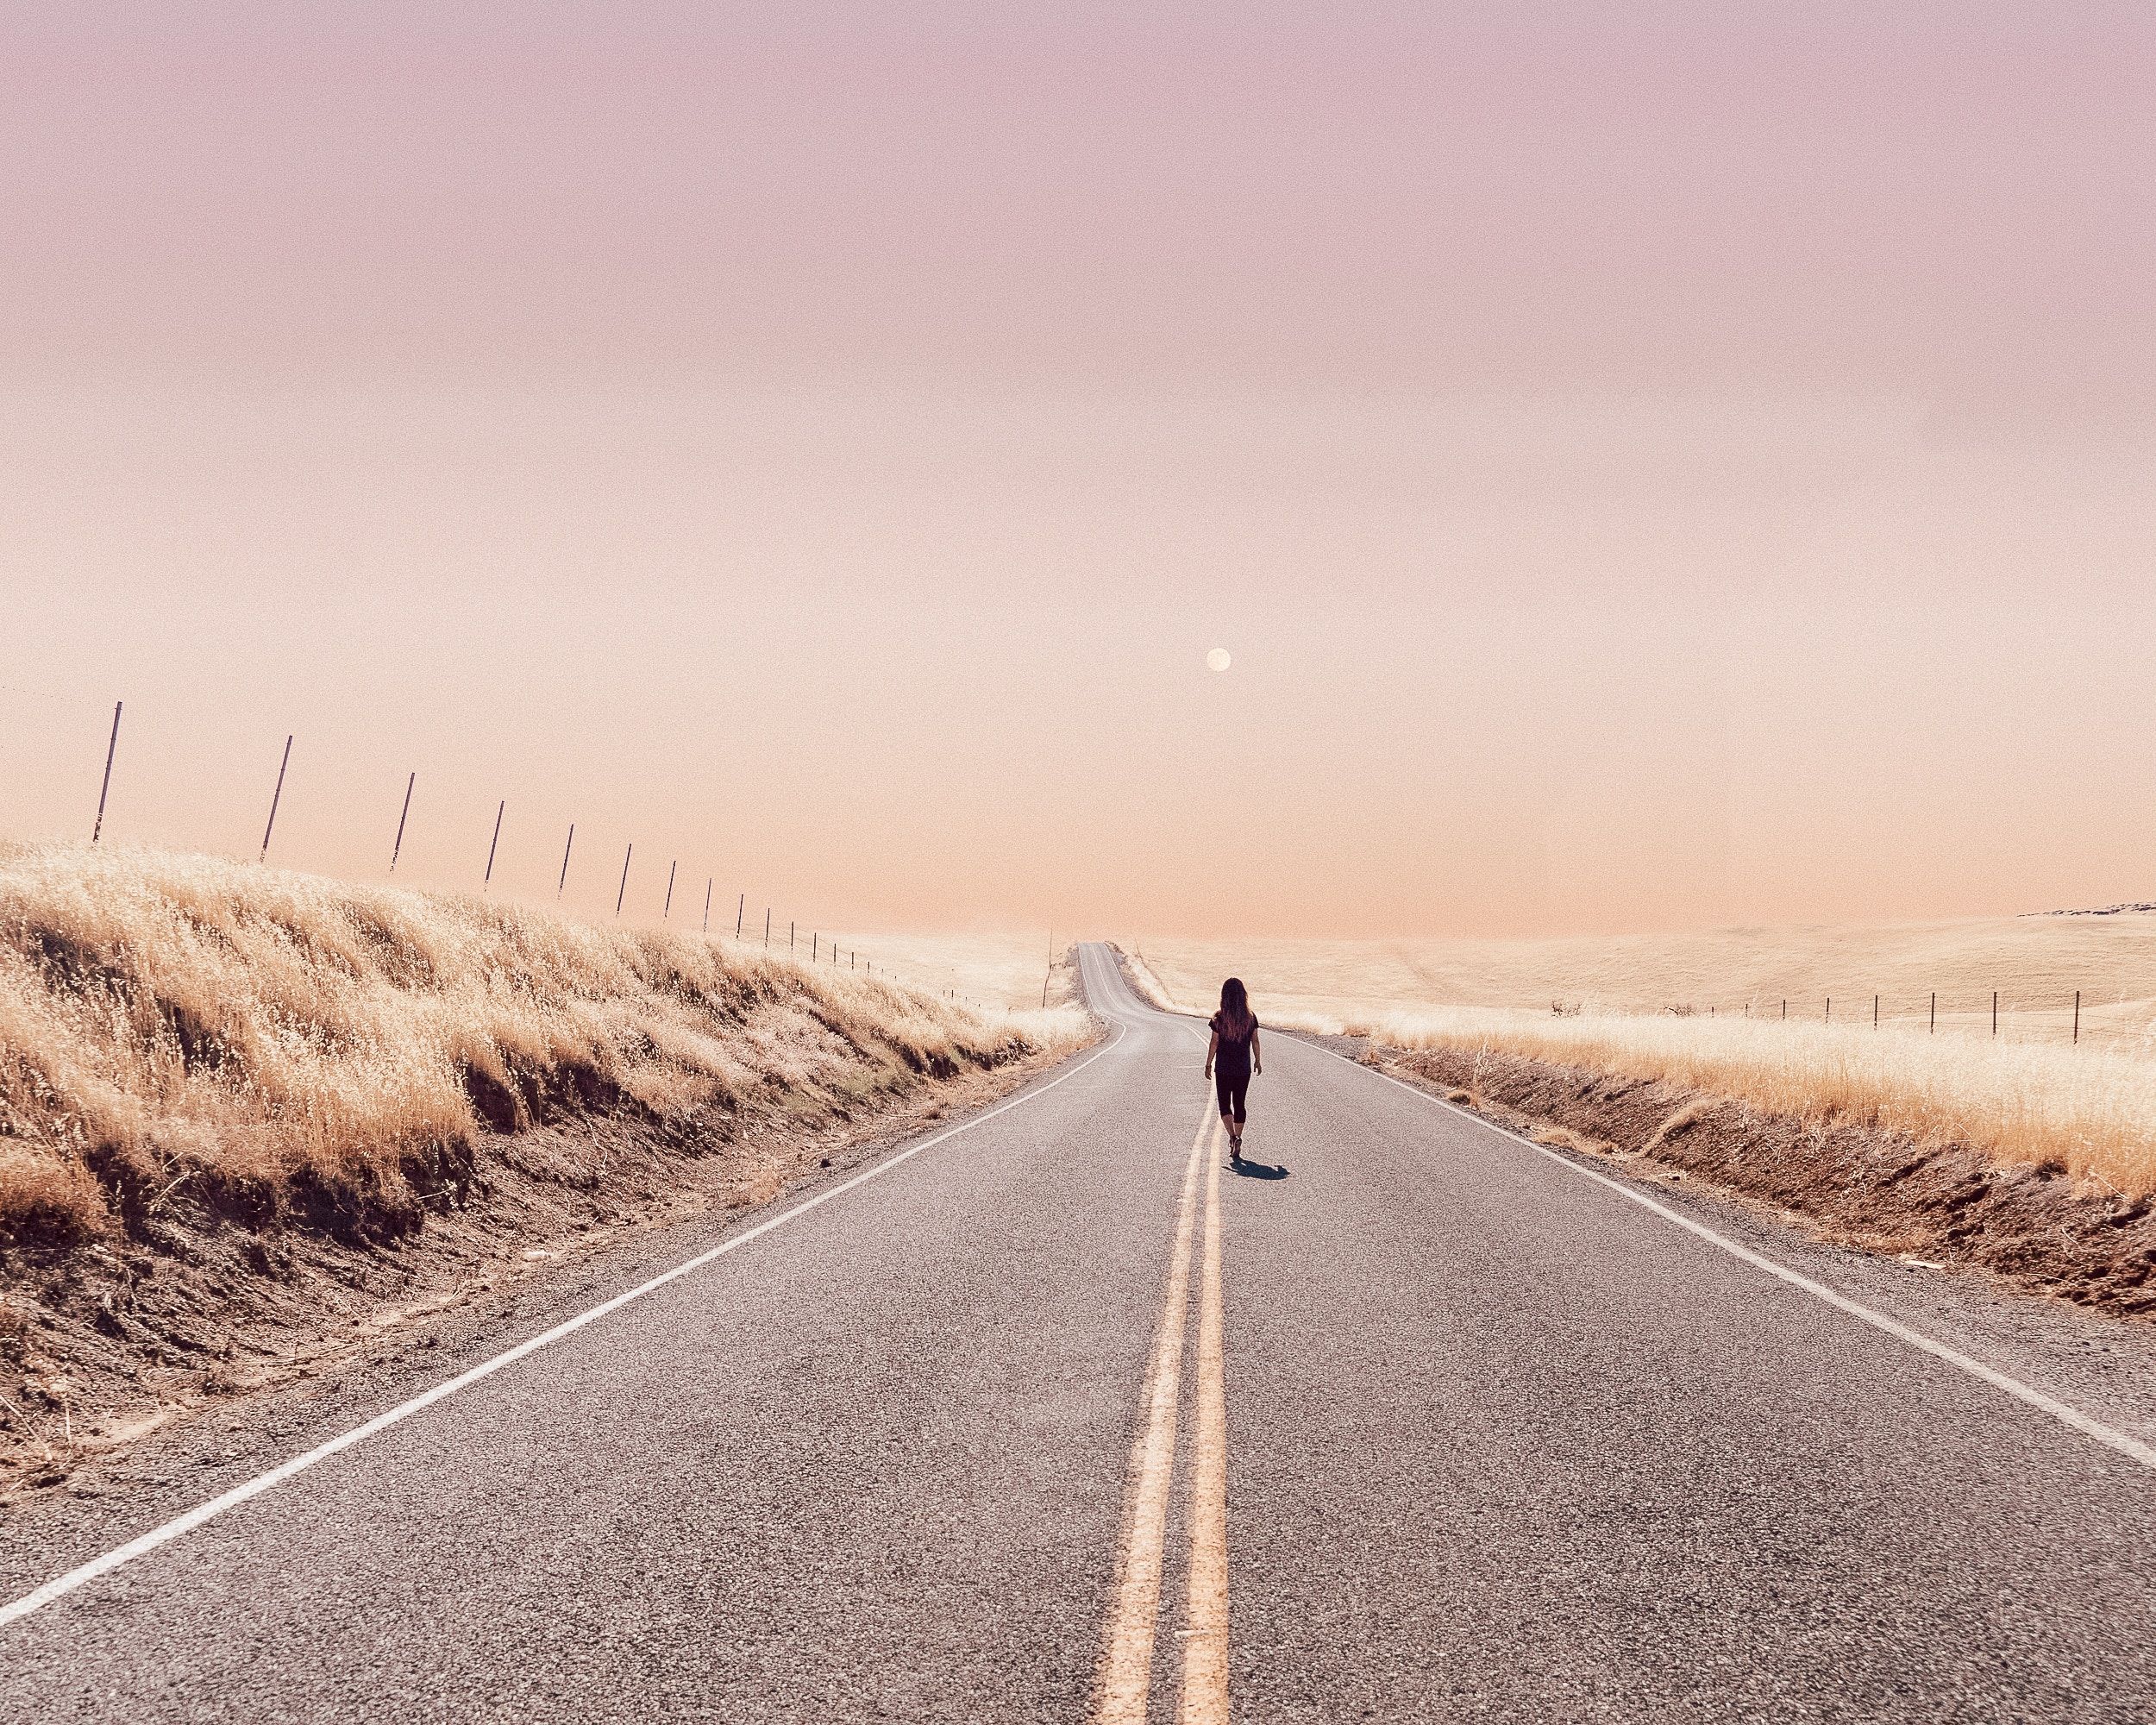 Girl Walking Alone On Desert Road, HD Photography, 4k Wallpaper